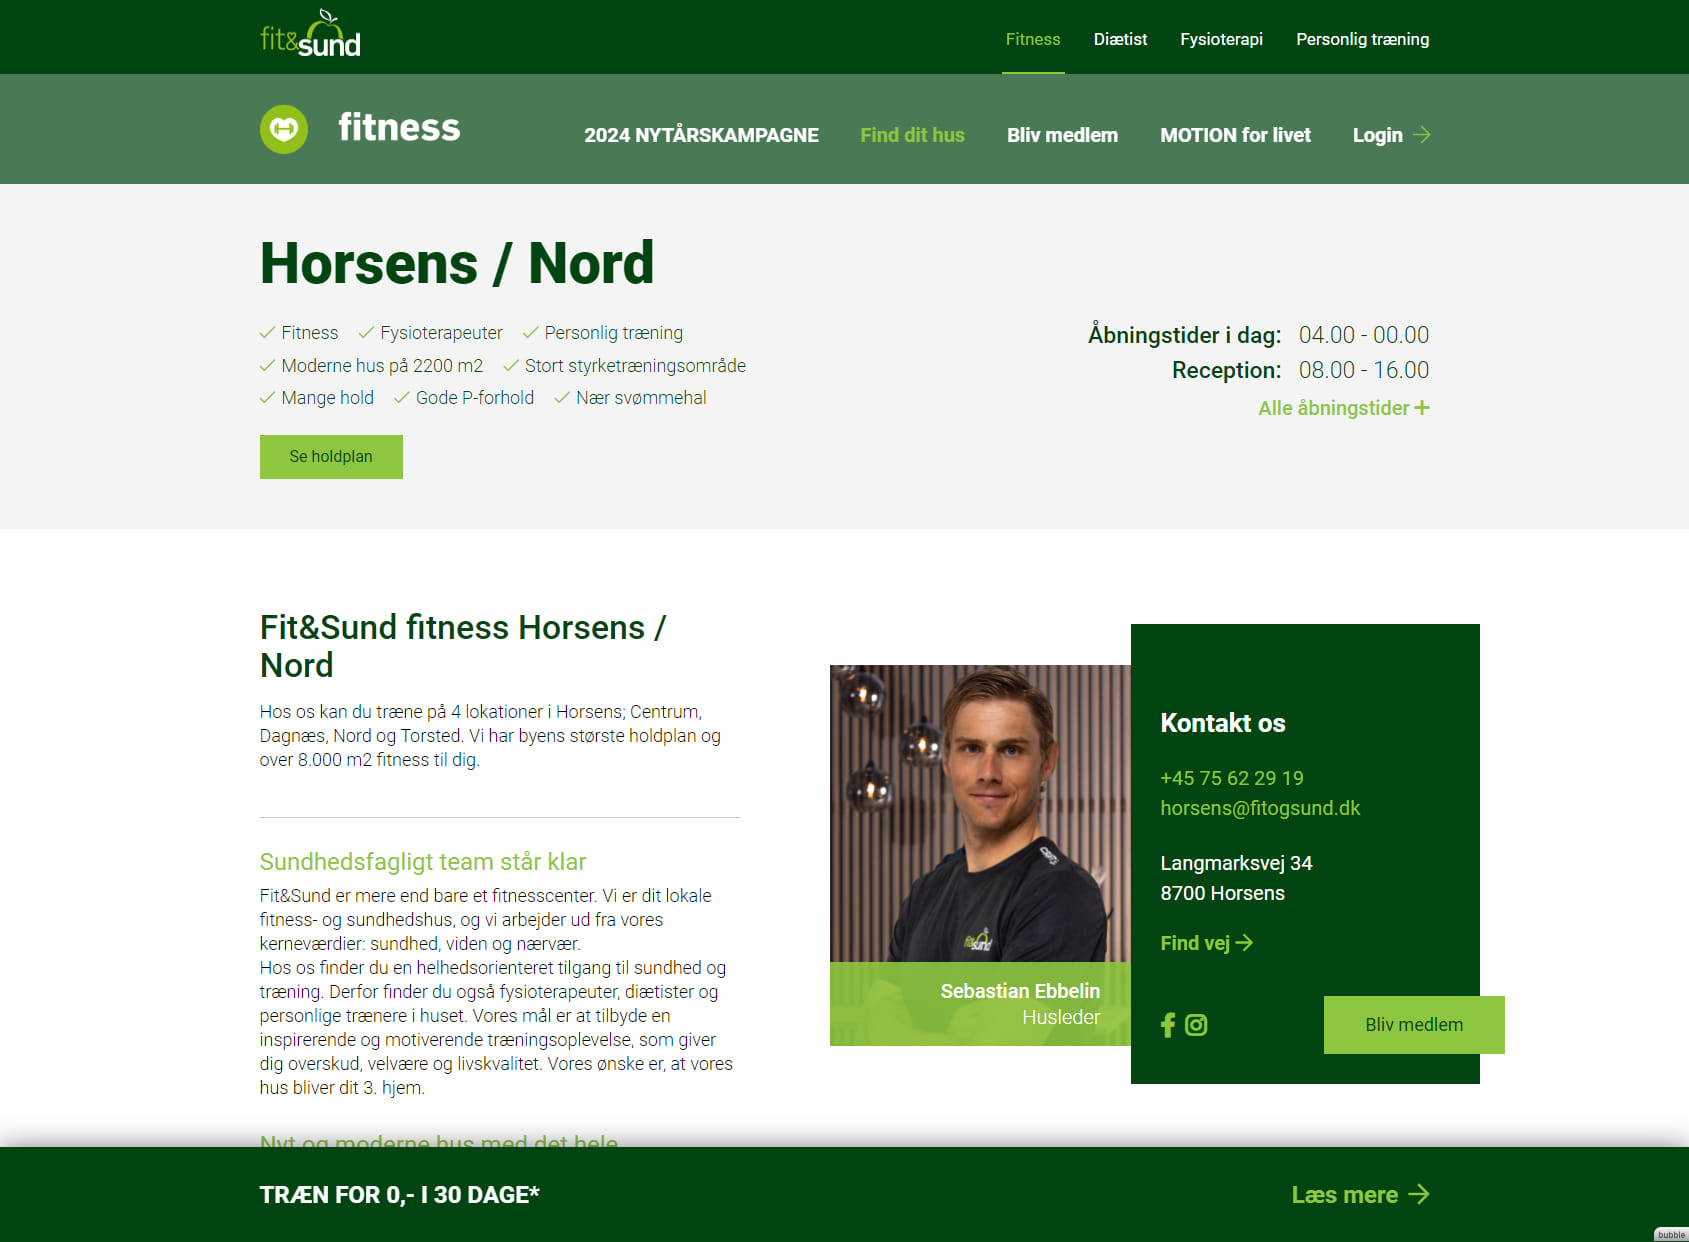 Fit&Sund Horsens/Nord